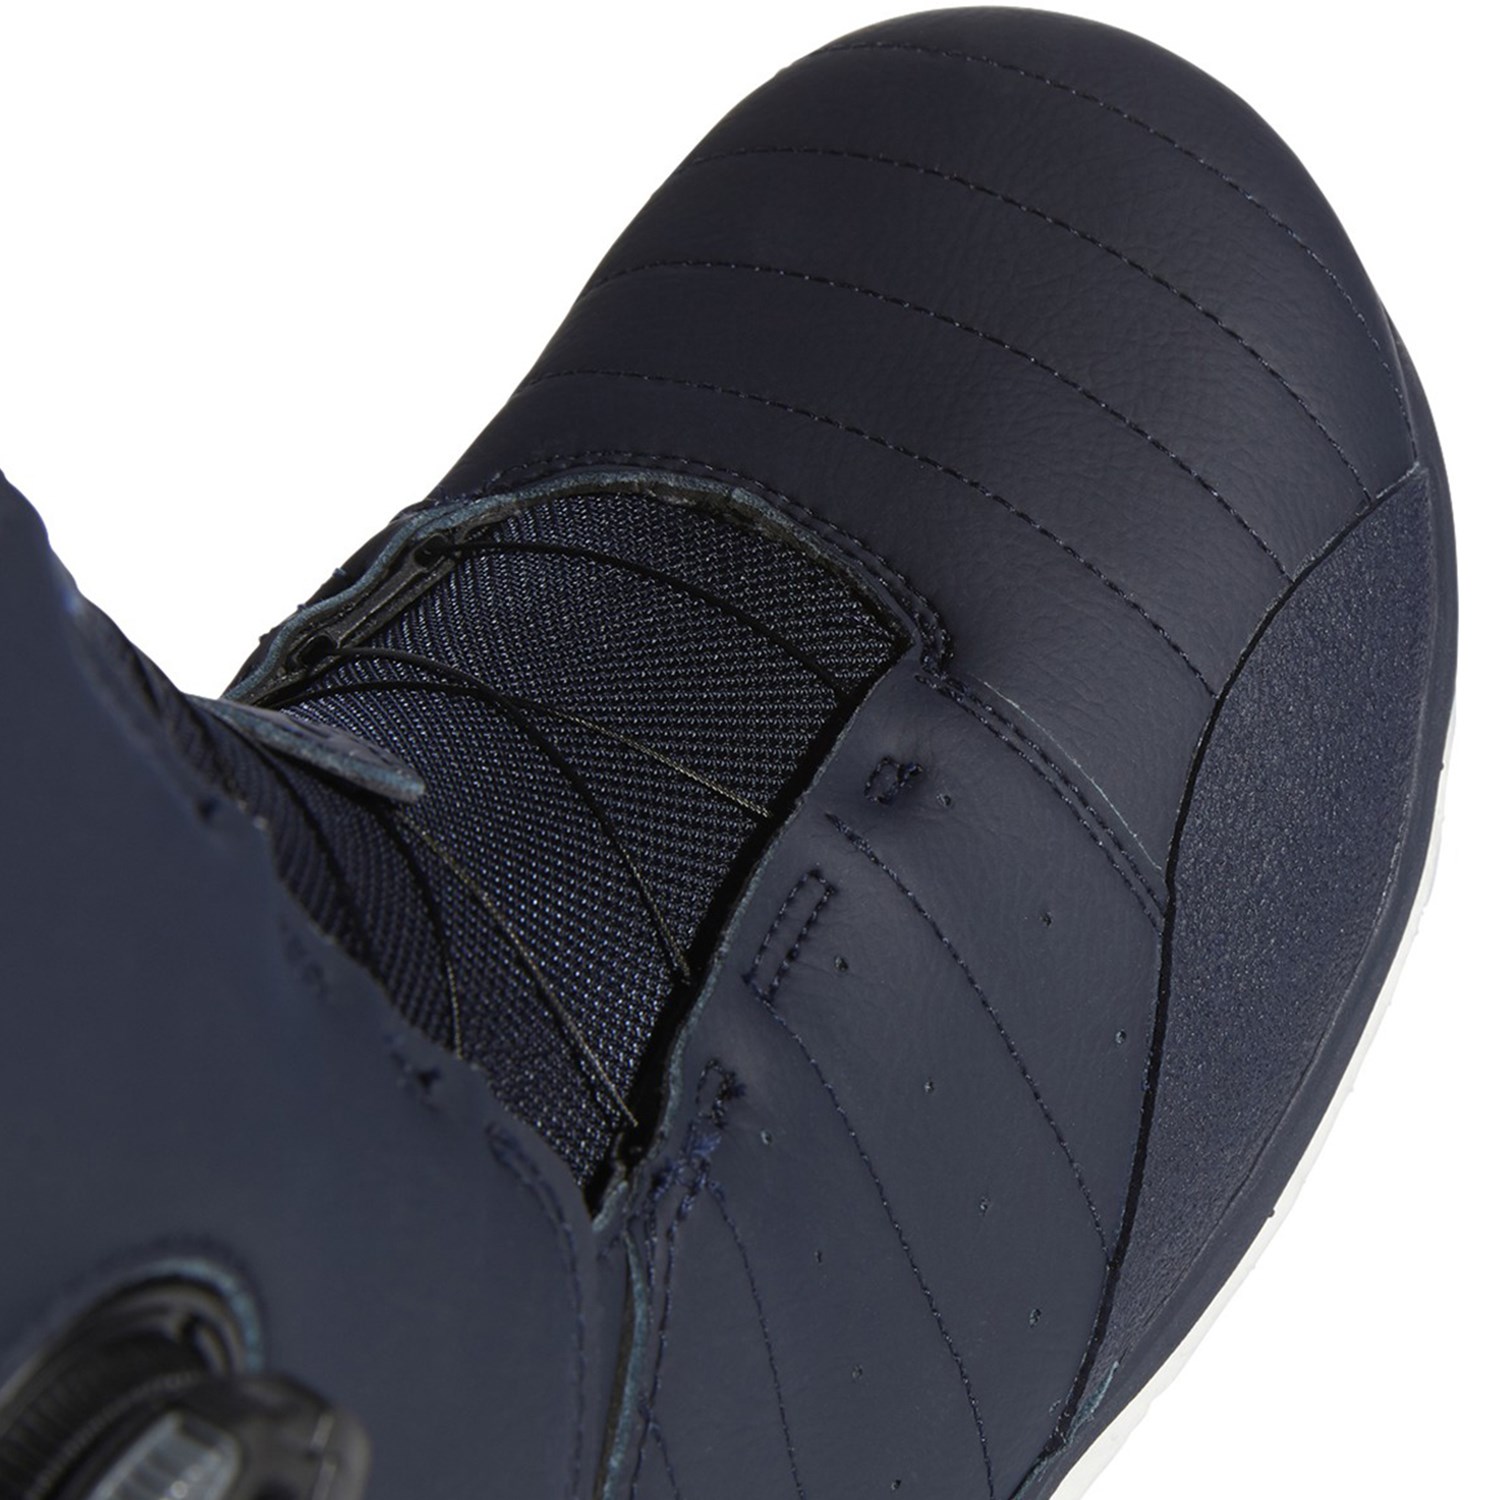 Adidas Acerra 3ST ADV Snowboard Boots 2021 | evo